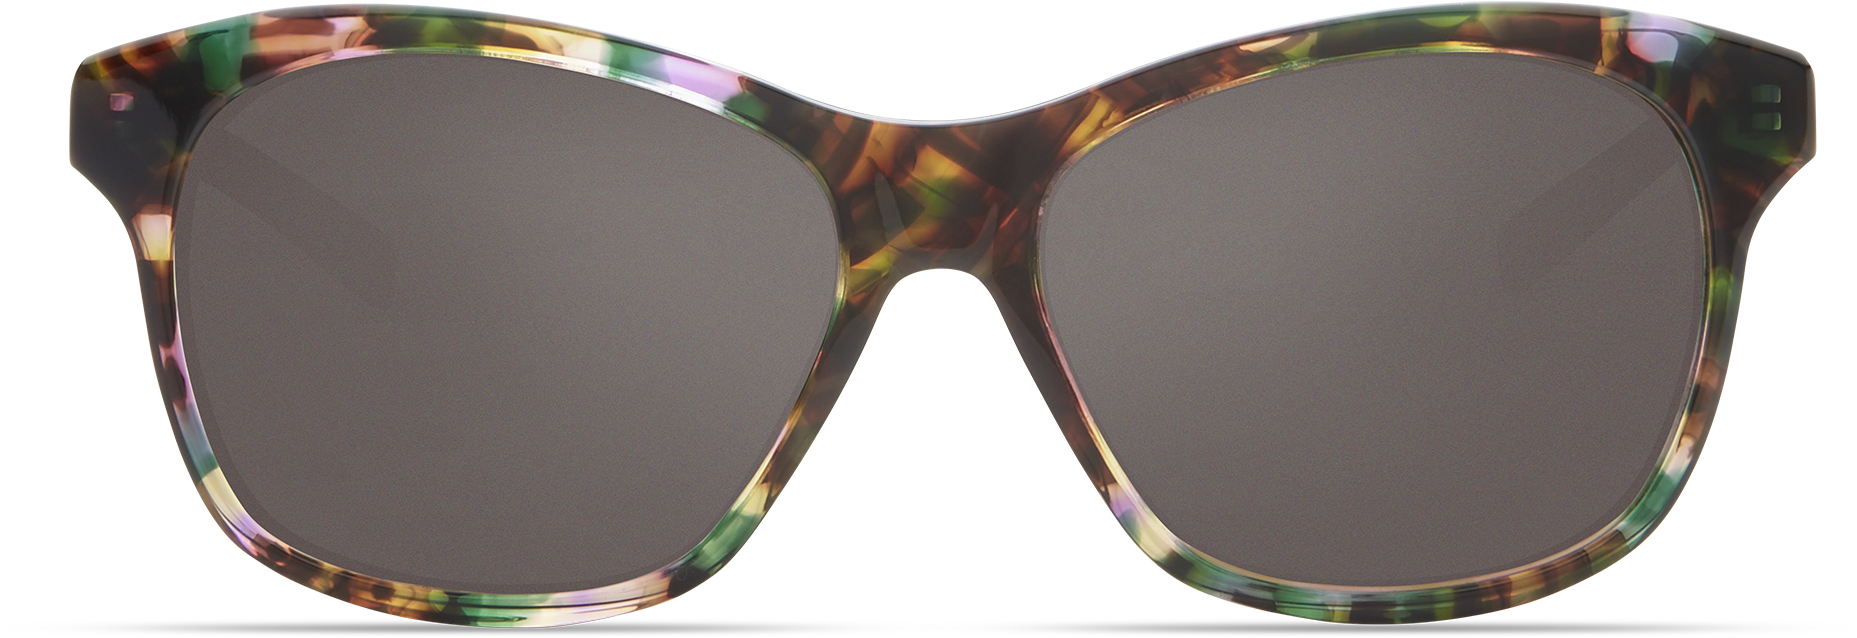 Costa Del Mar Sarasota Sunglasses In Shiny Abalone, - Costa Sarasota (2000x1000), Png Download